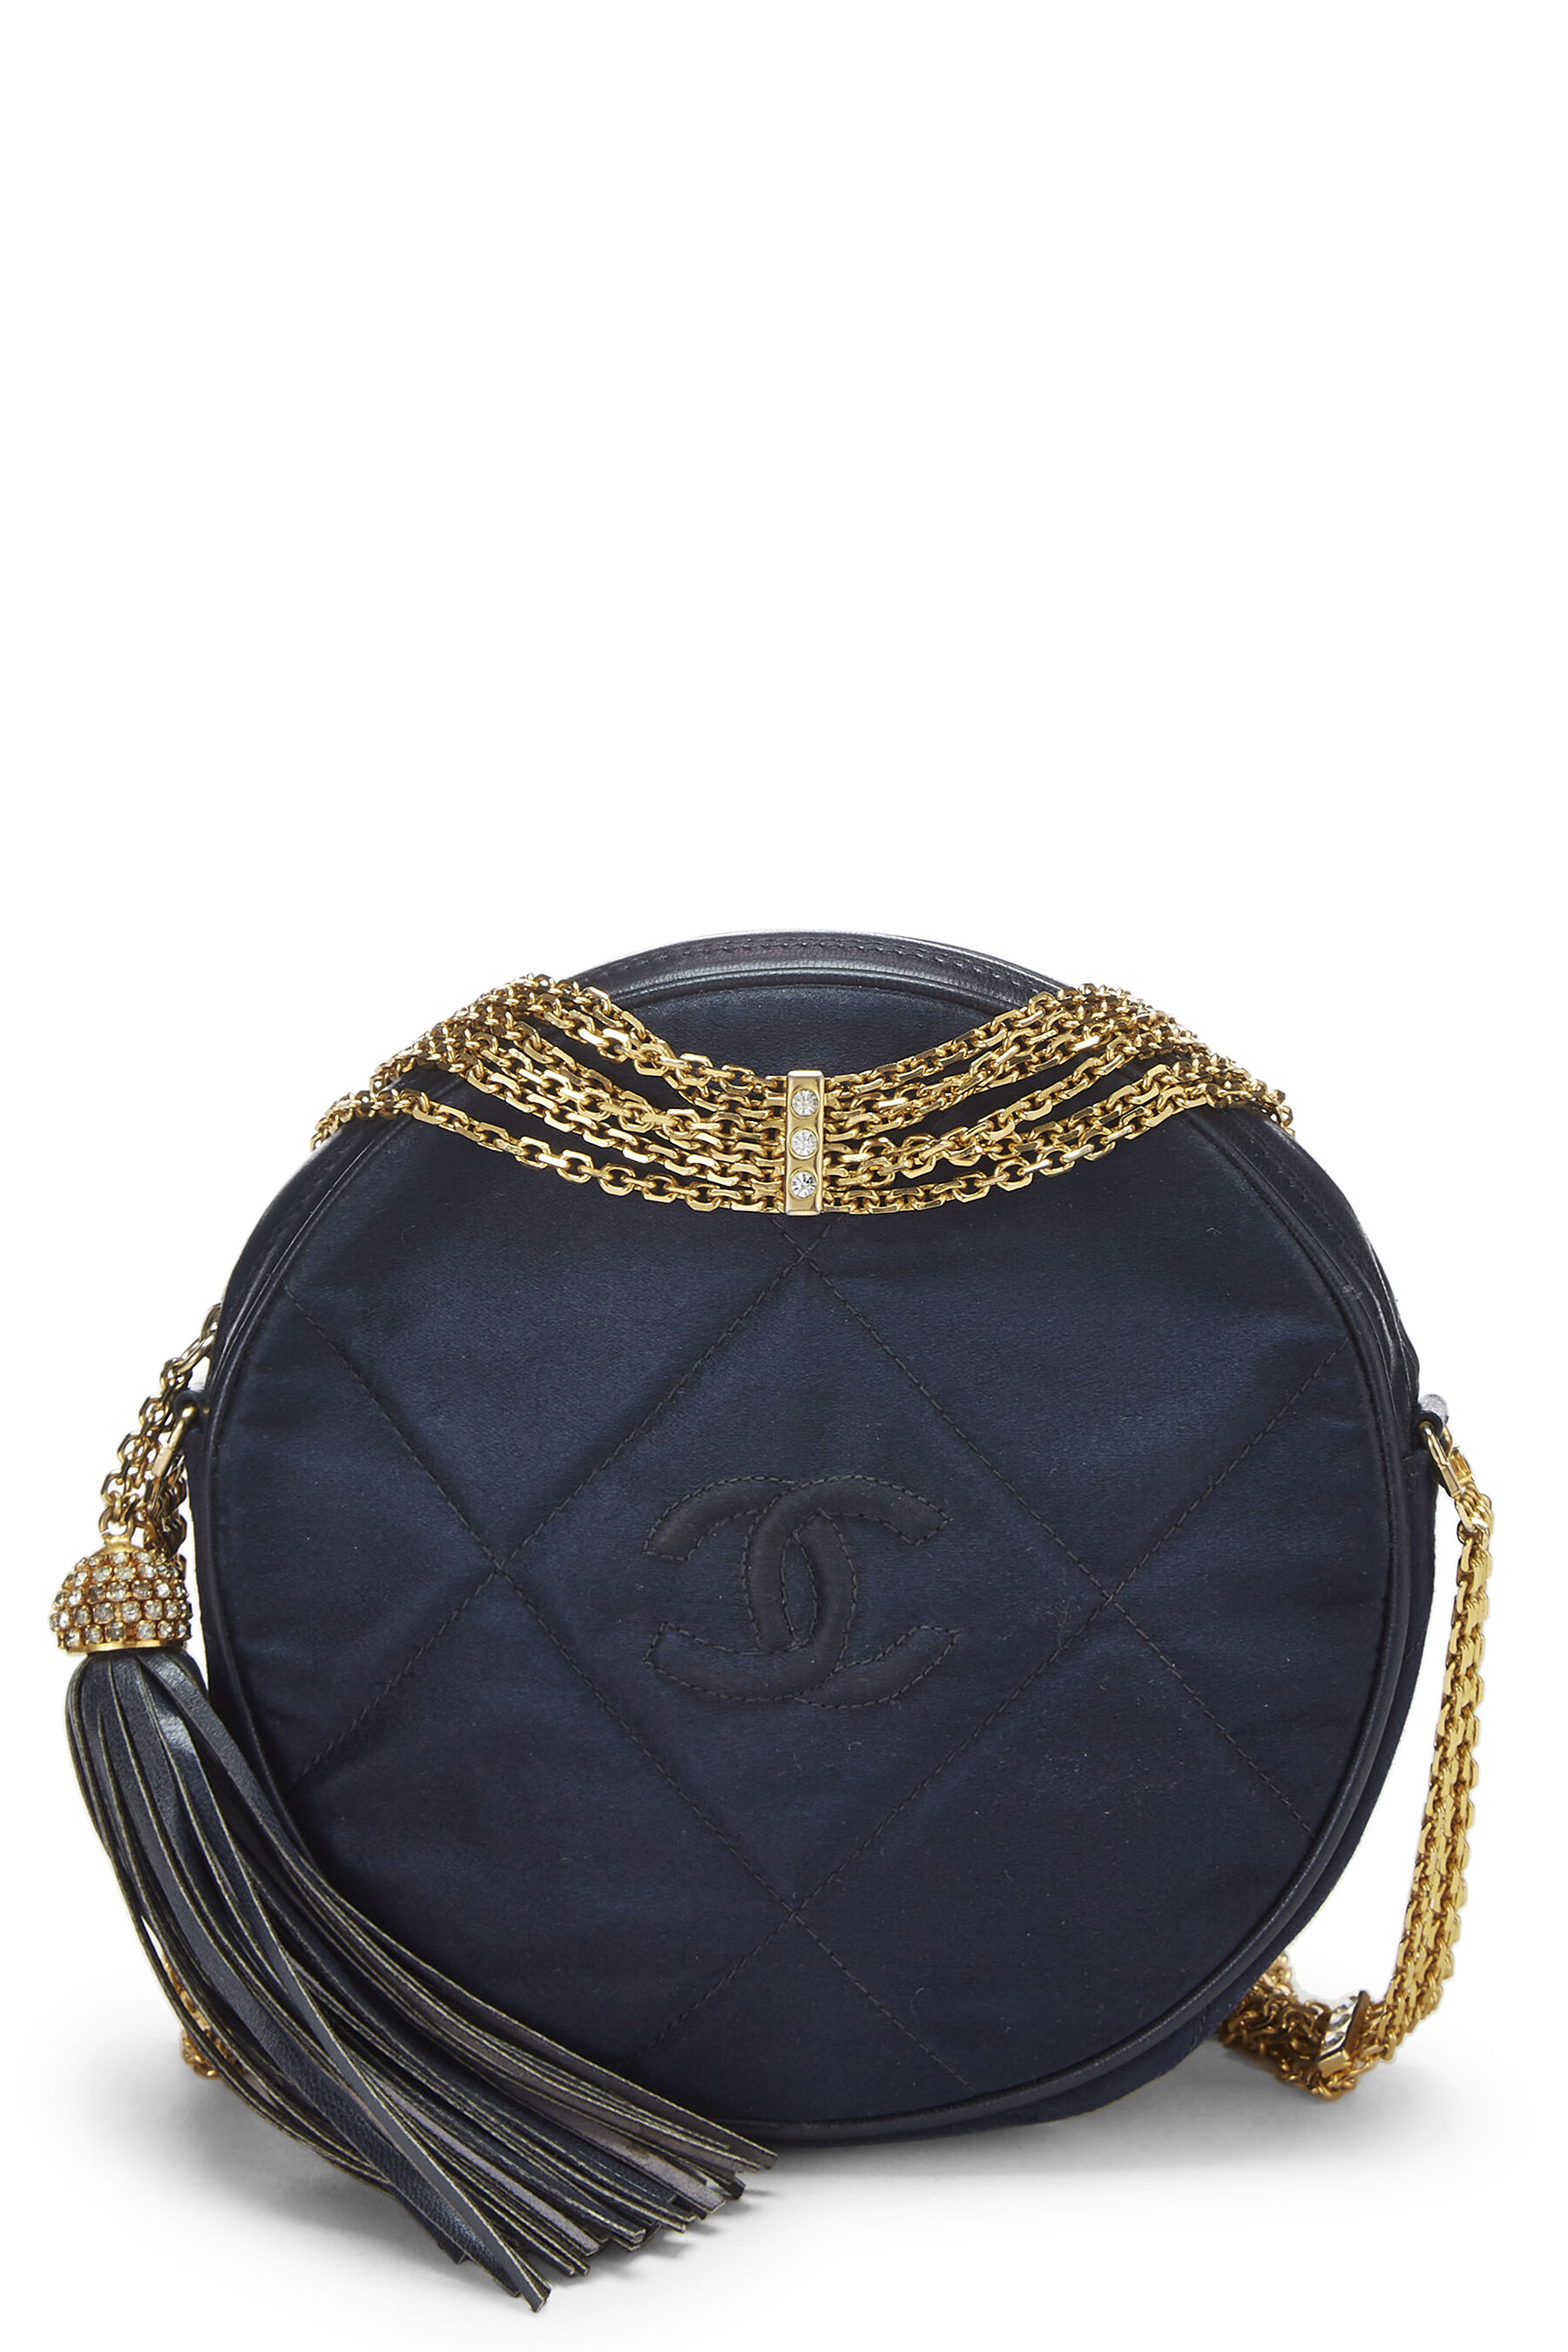 Chanel CC Circle Shoulder Bag